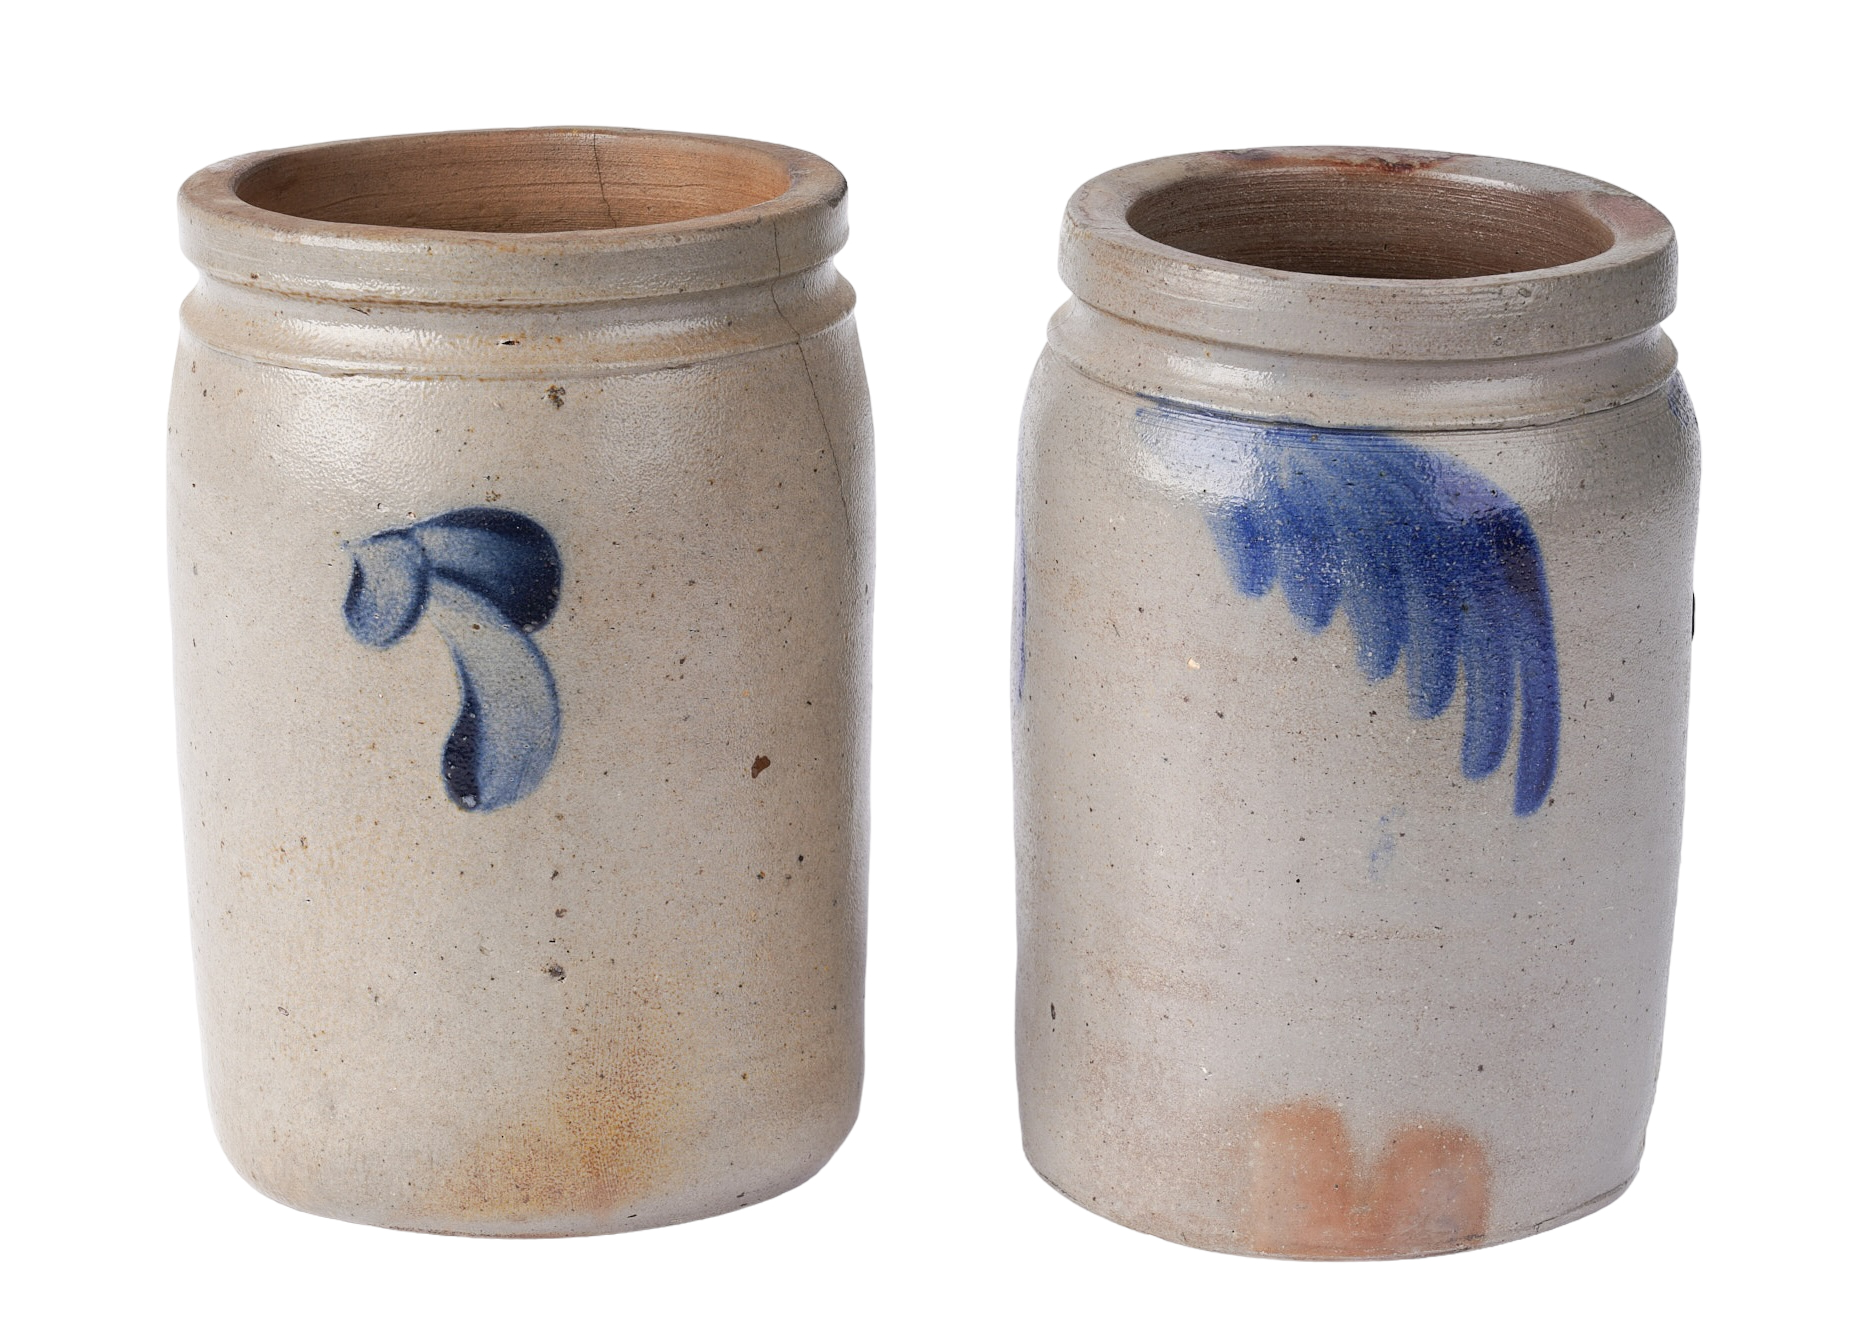  2 Blue decorated stoneware jars  2e207f